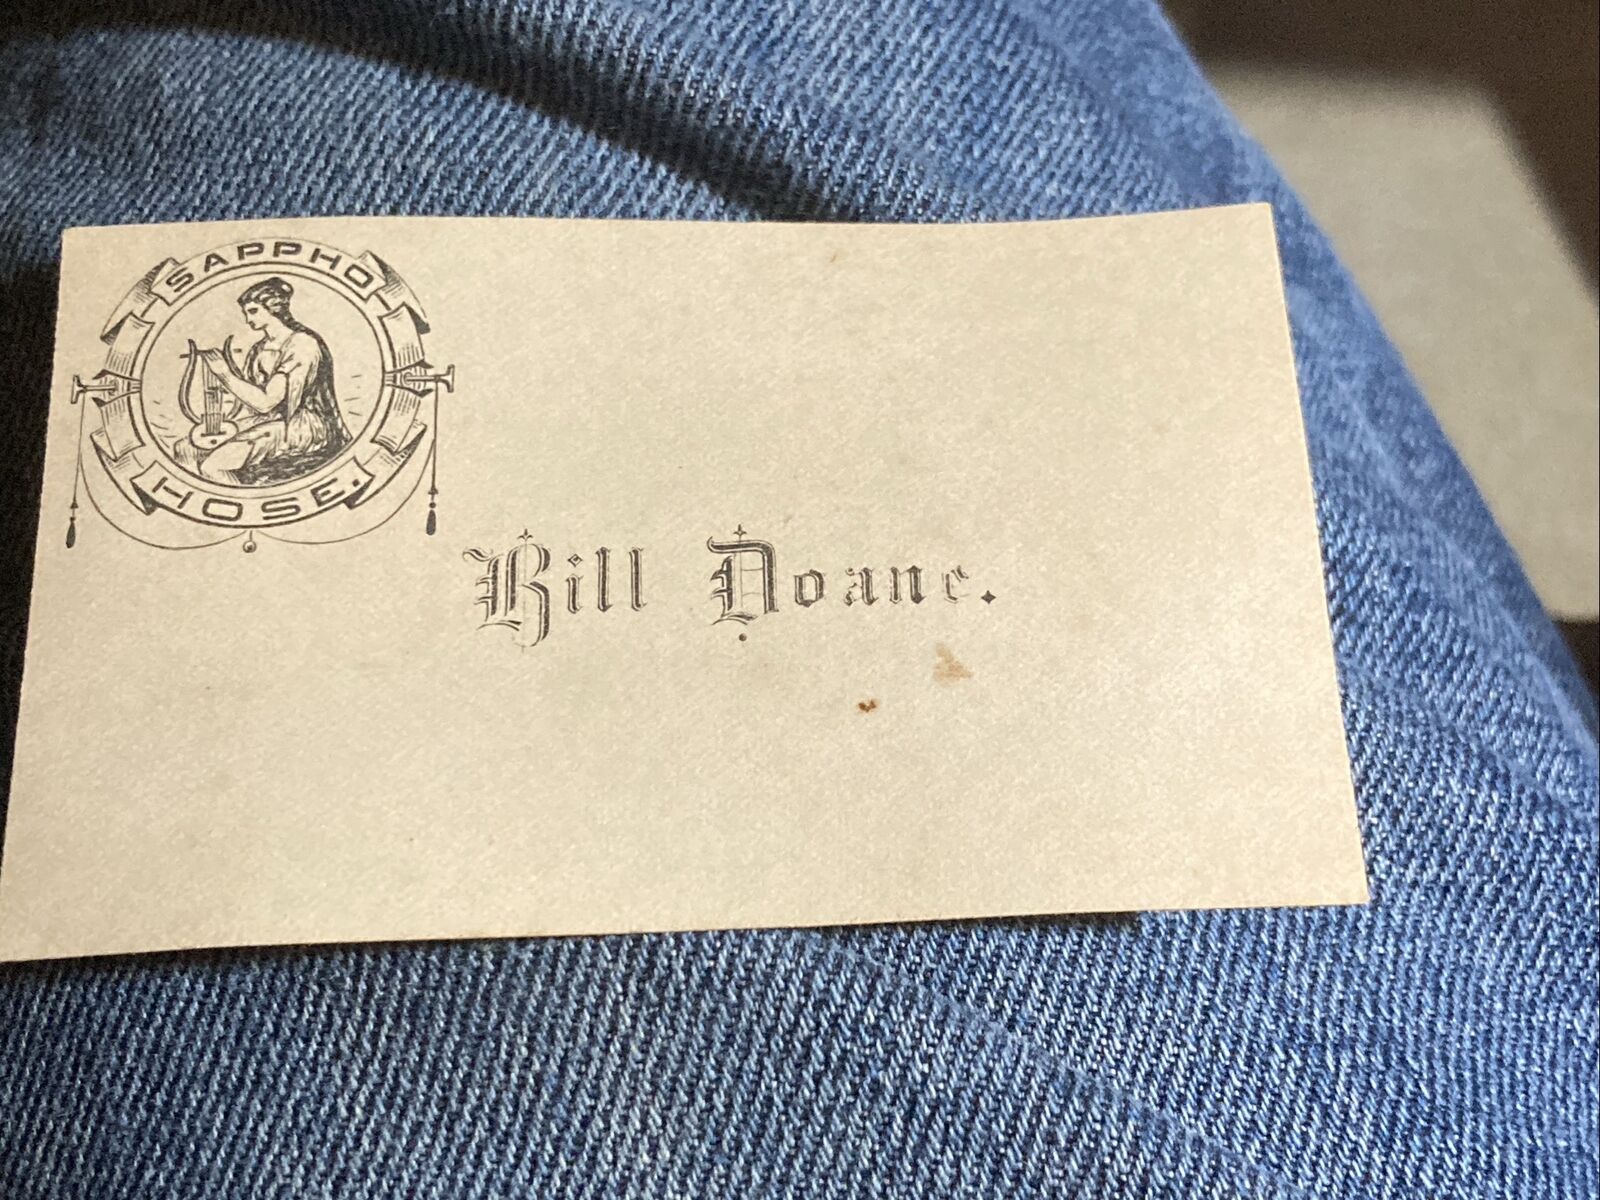 1880’s - Sappho Hose - Bill Doane Name Trade Card